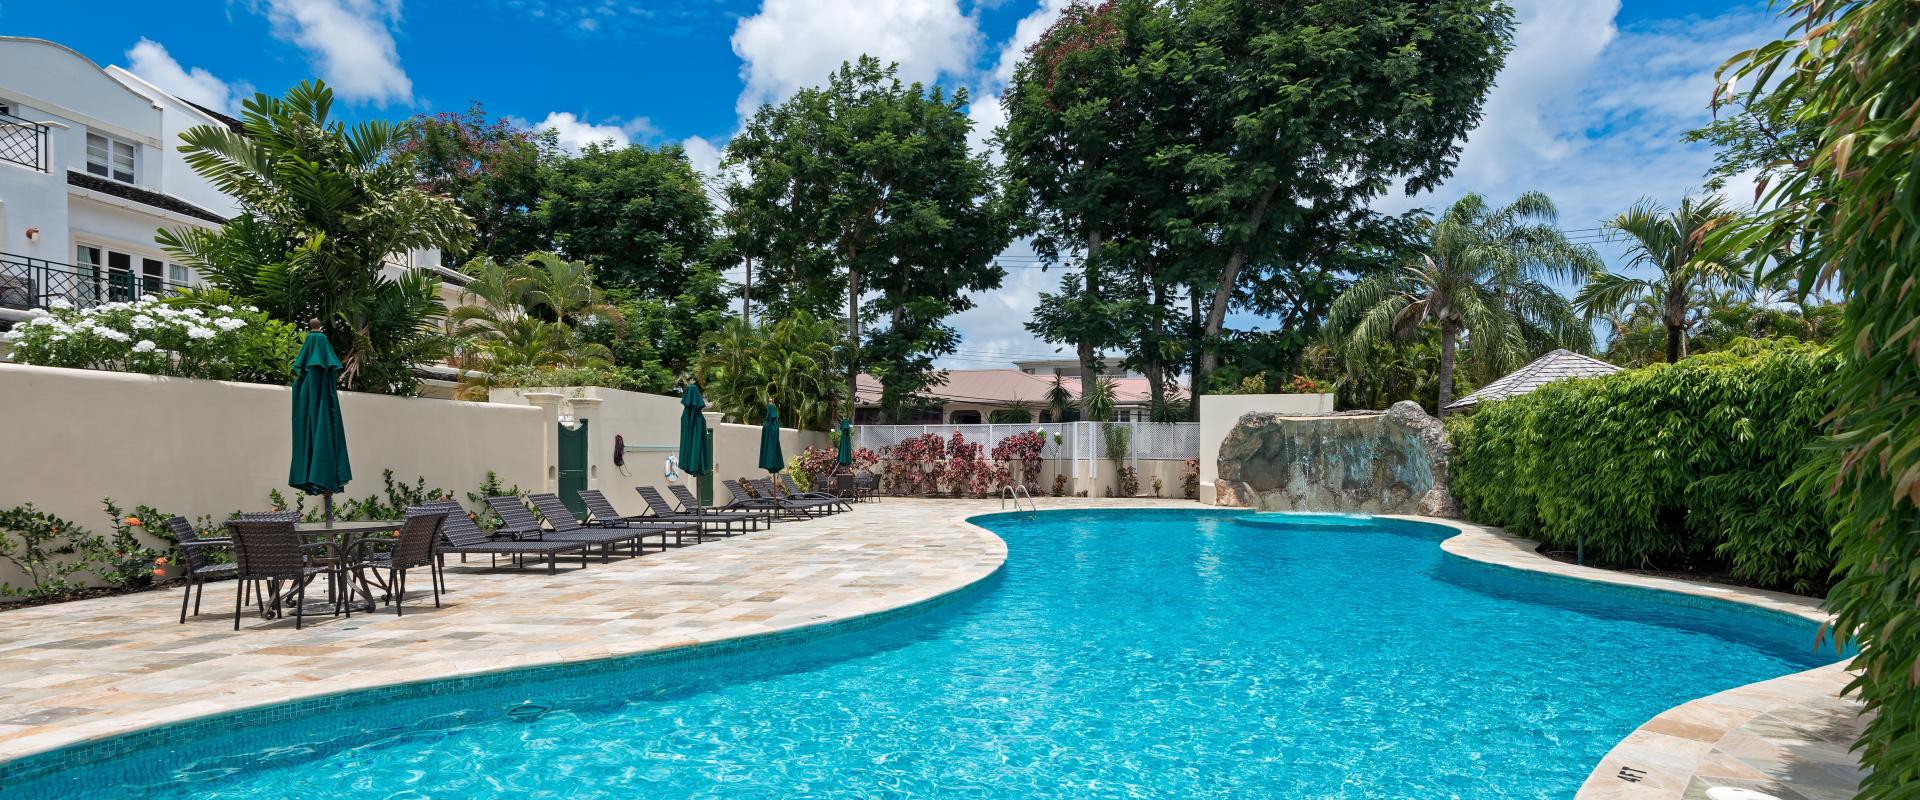 Coco Mullins Barbados Holiday Rental Home Communal Pool